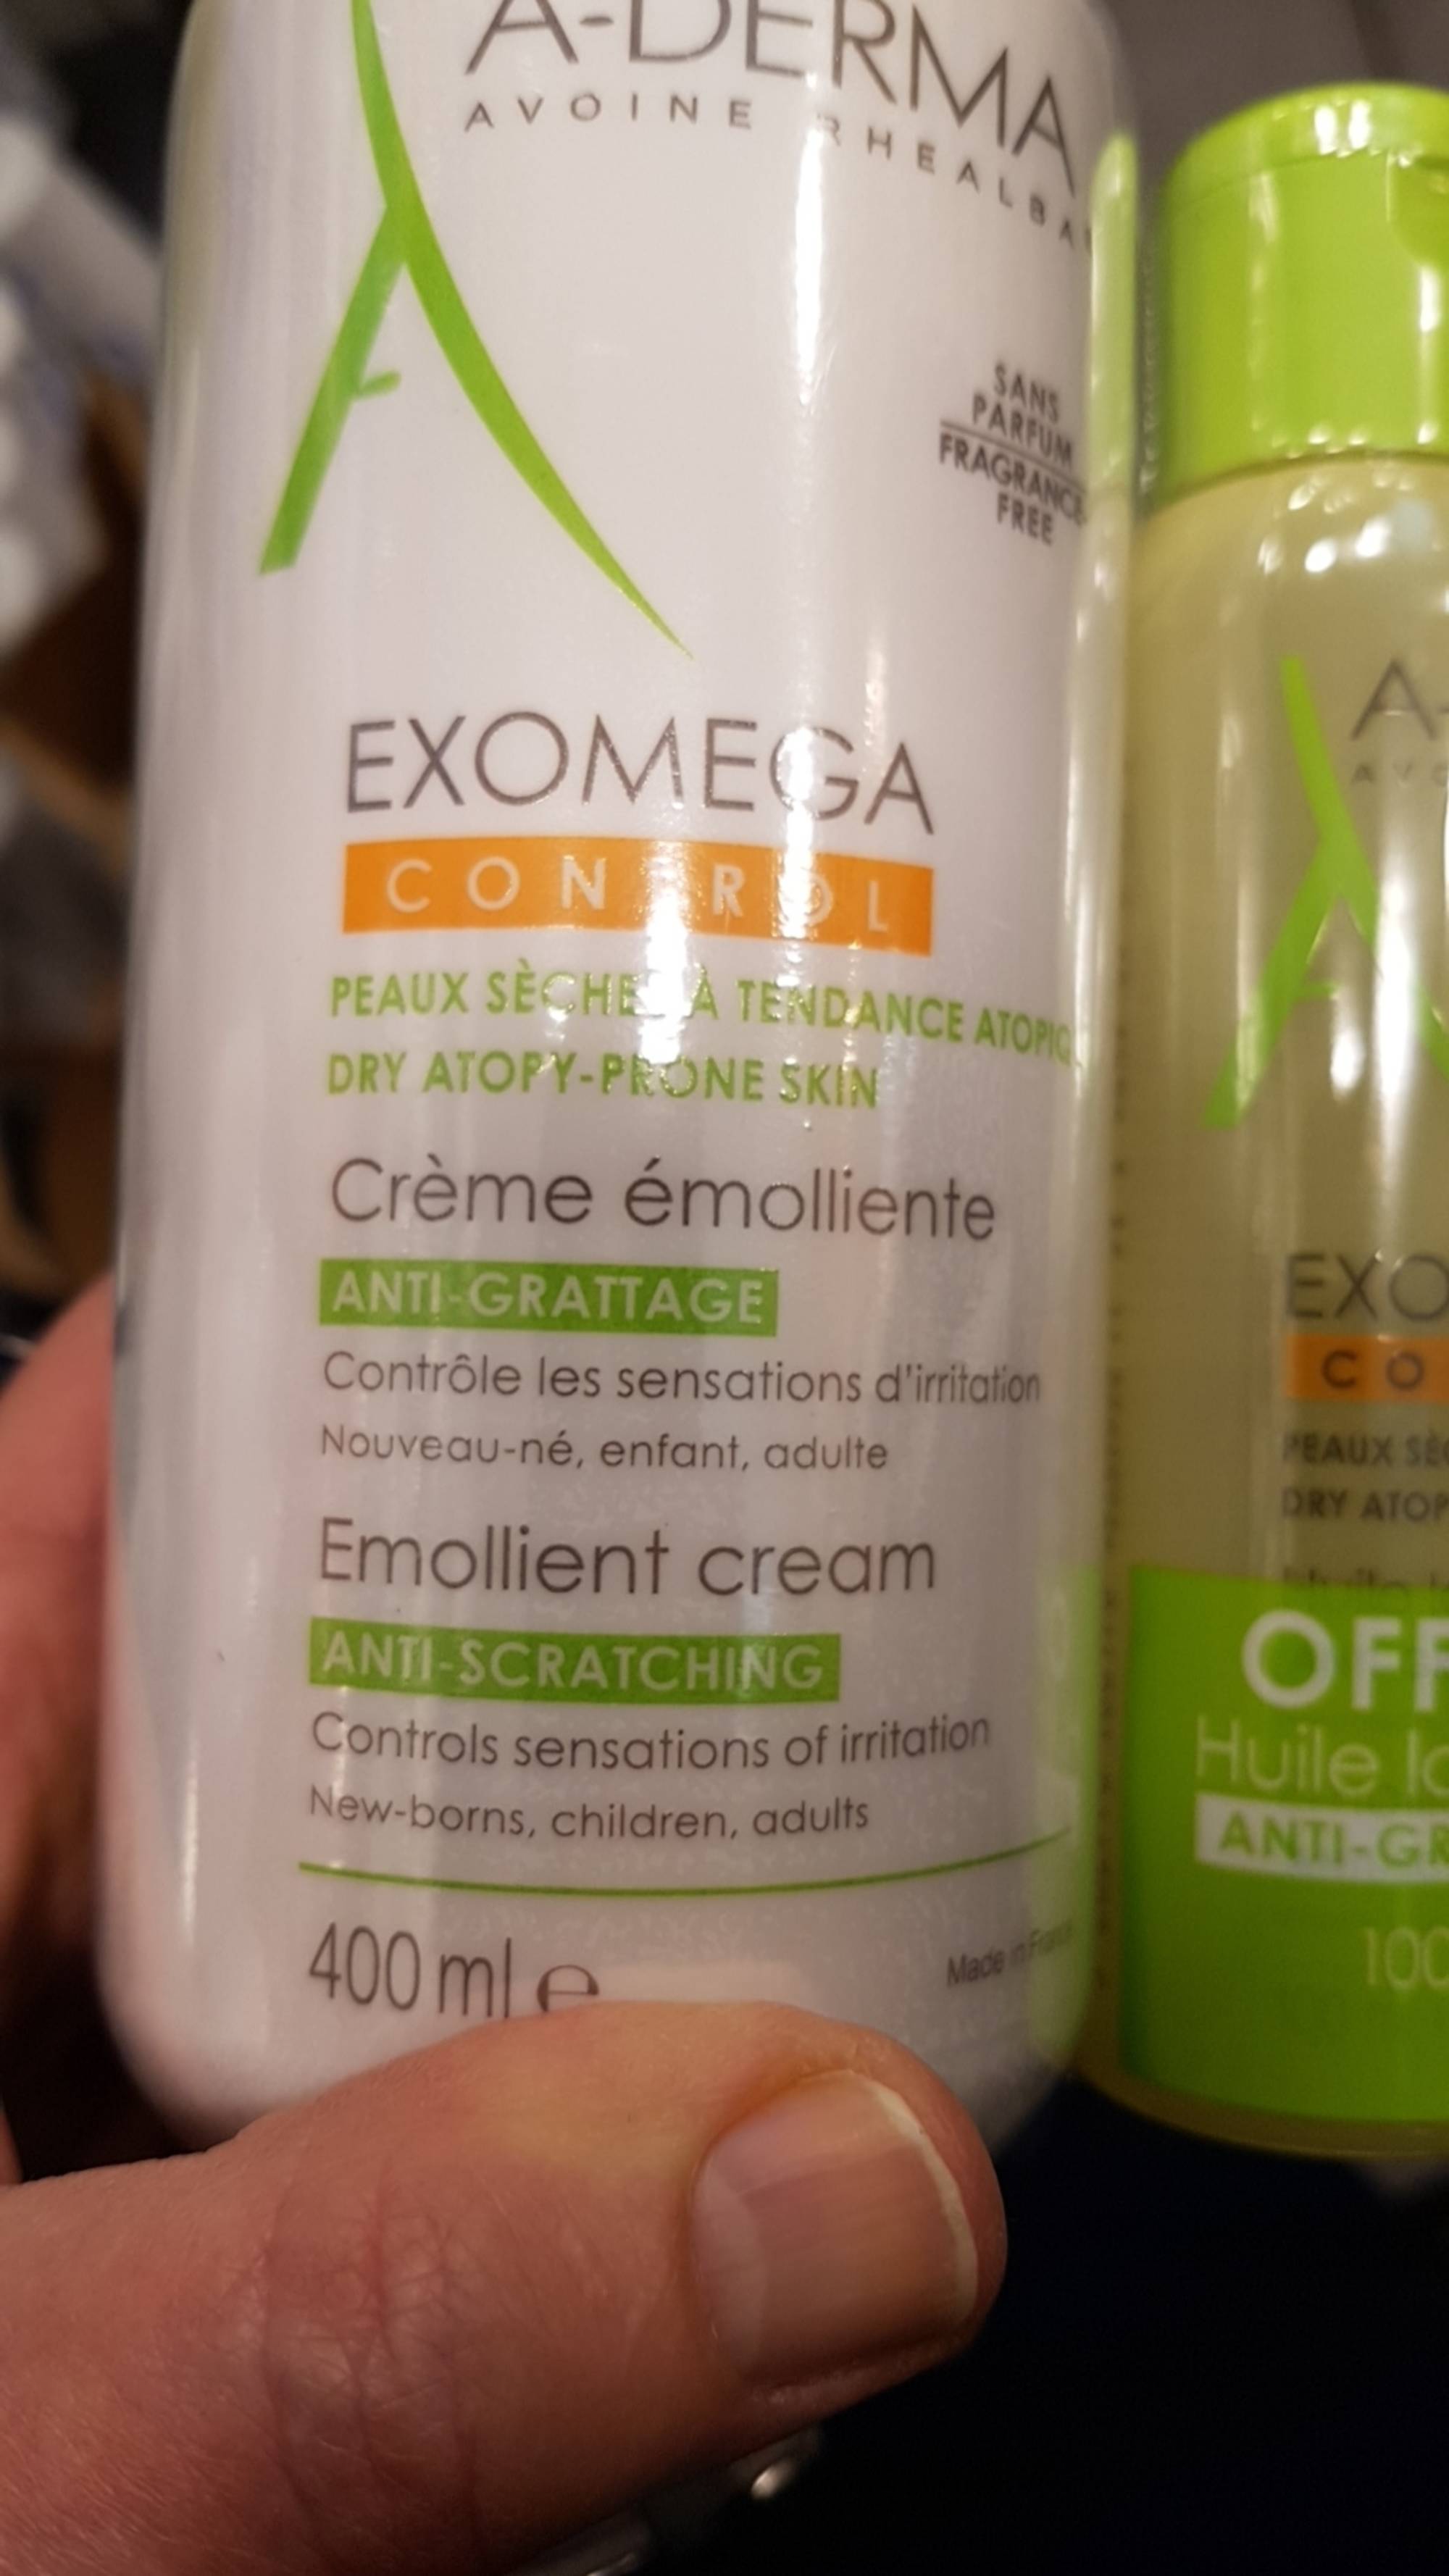 A-DERMA - Exomega Control - Crème émolliente anti-grattage